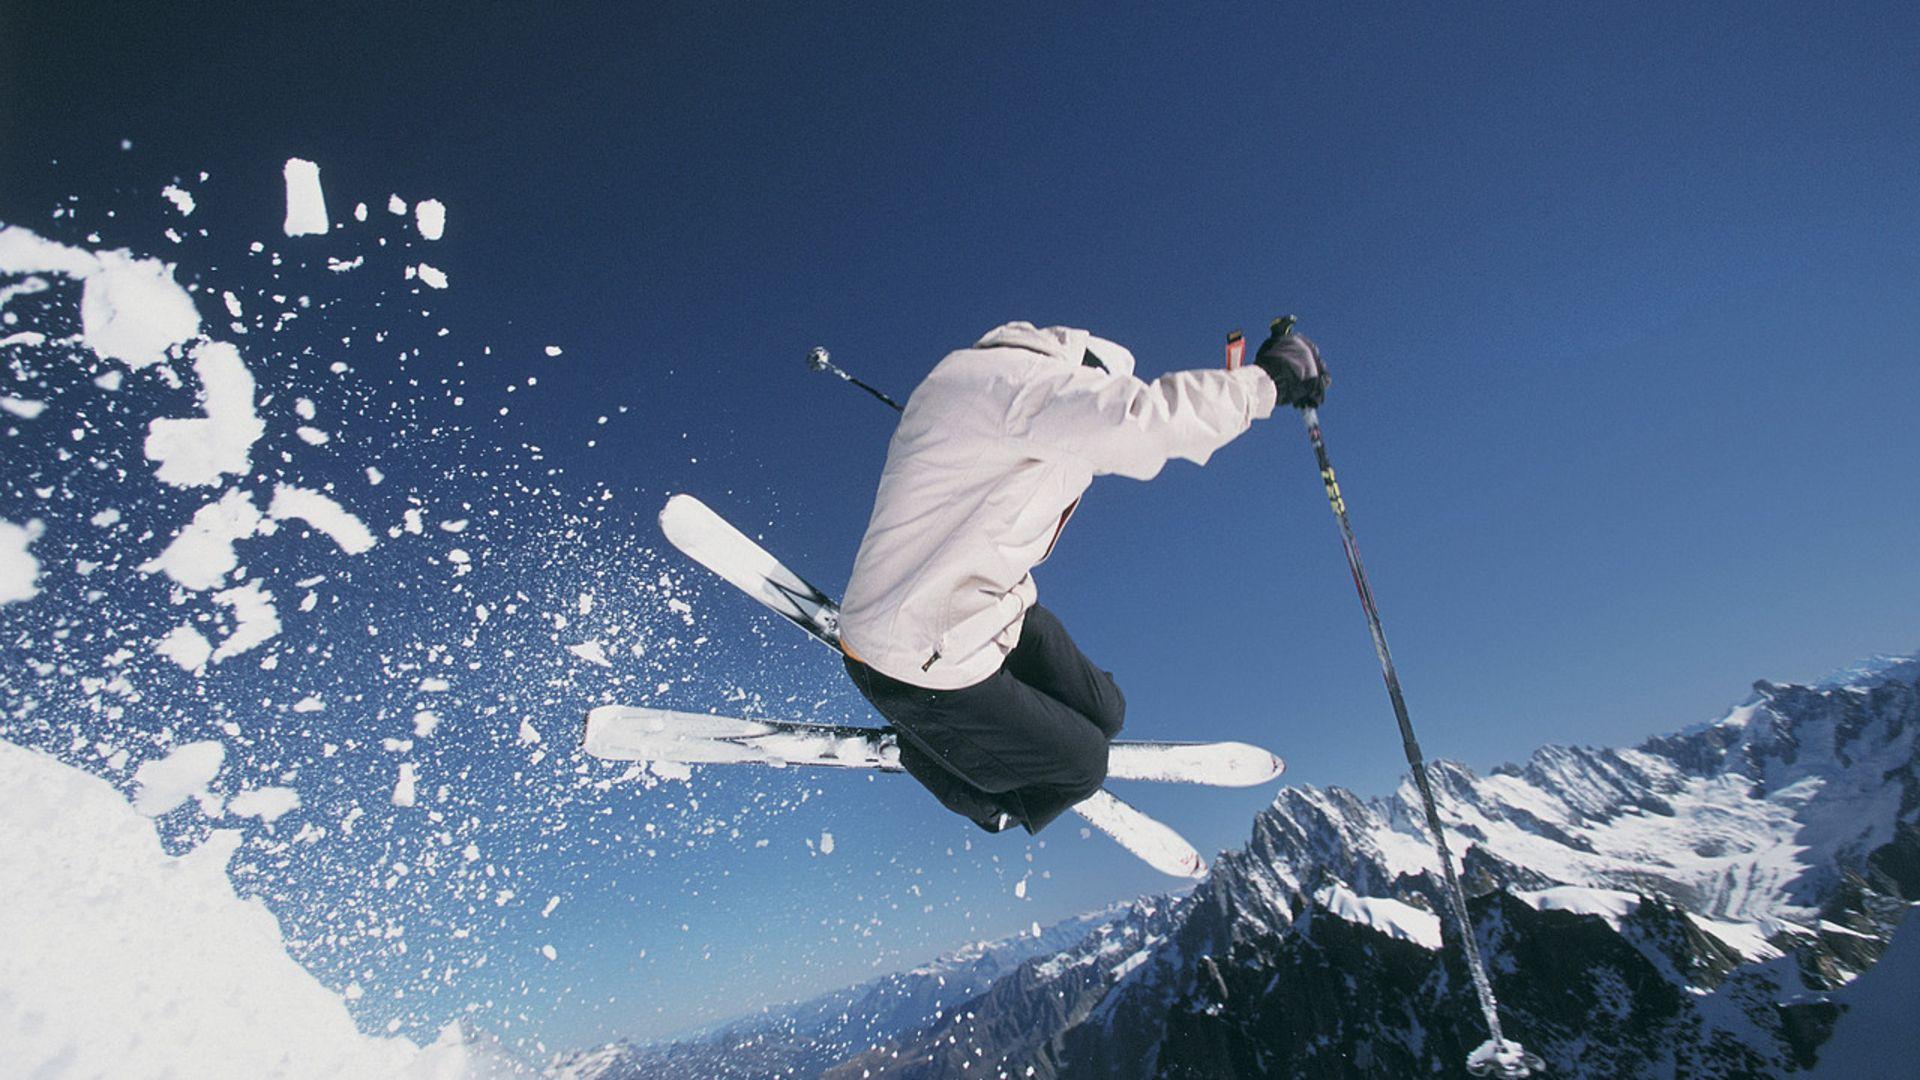 Fantastic HD Skiing Wallpaper